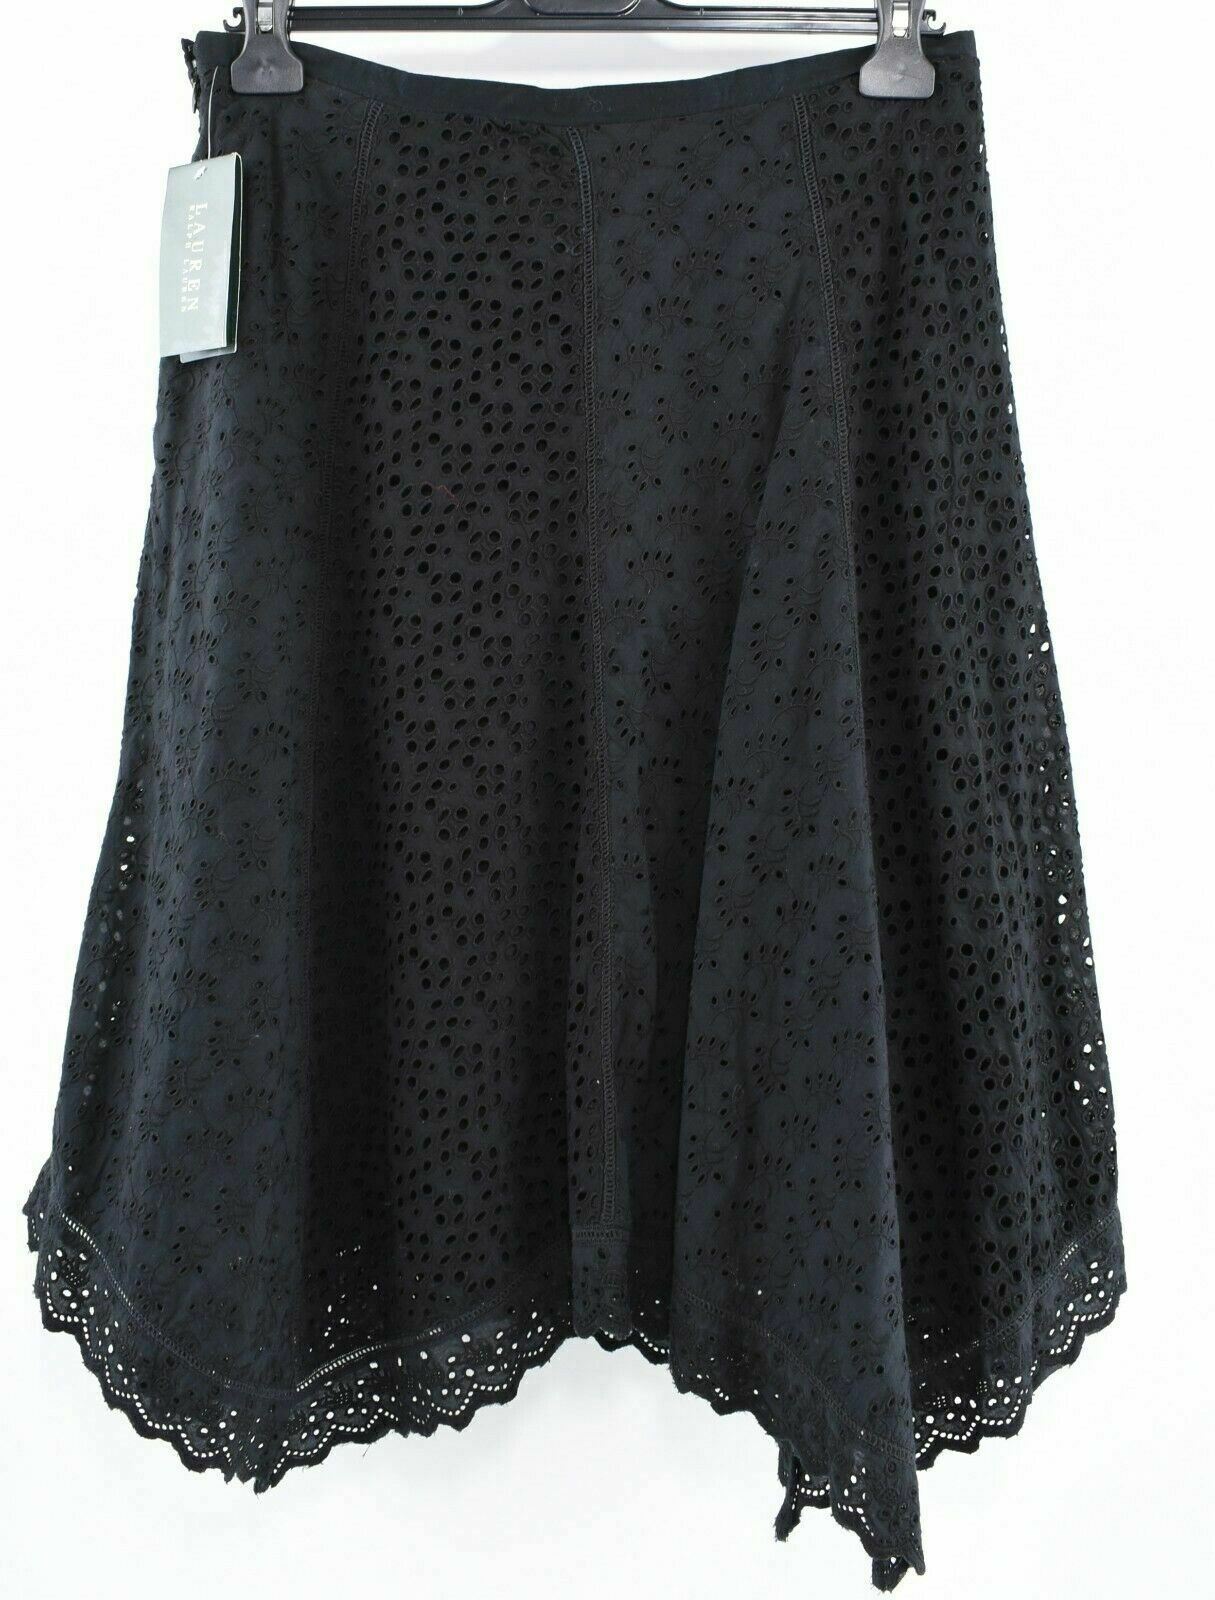 LAUREN RALPH LAUREN Women's Embroidered A-Line Skirt, Black, size UK 10